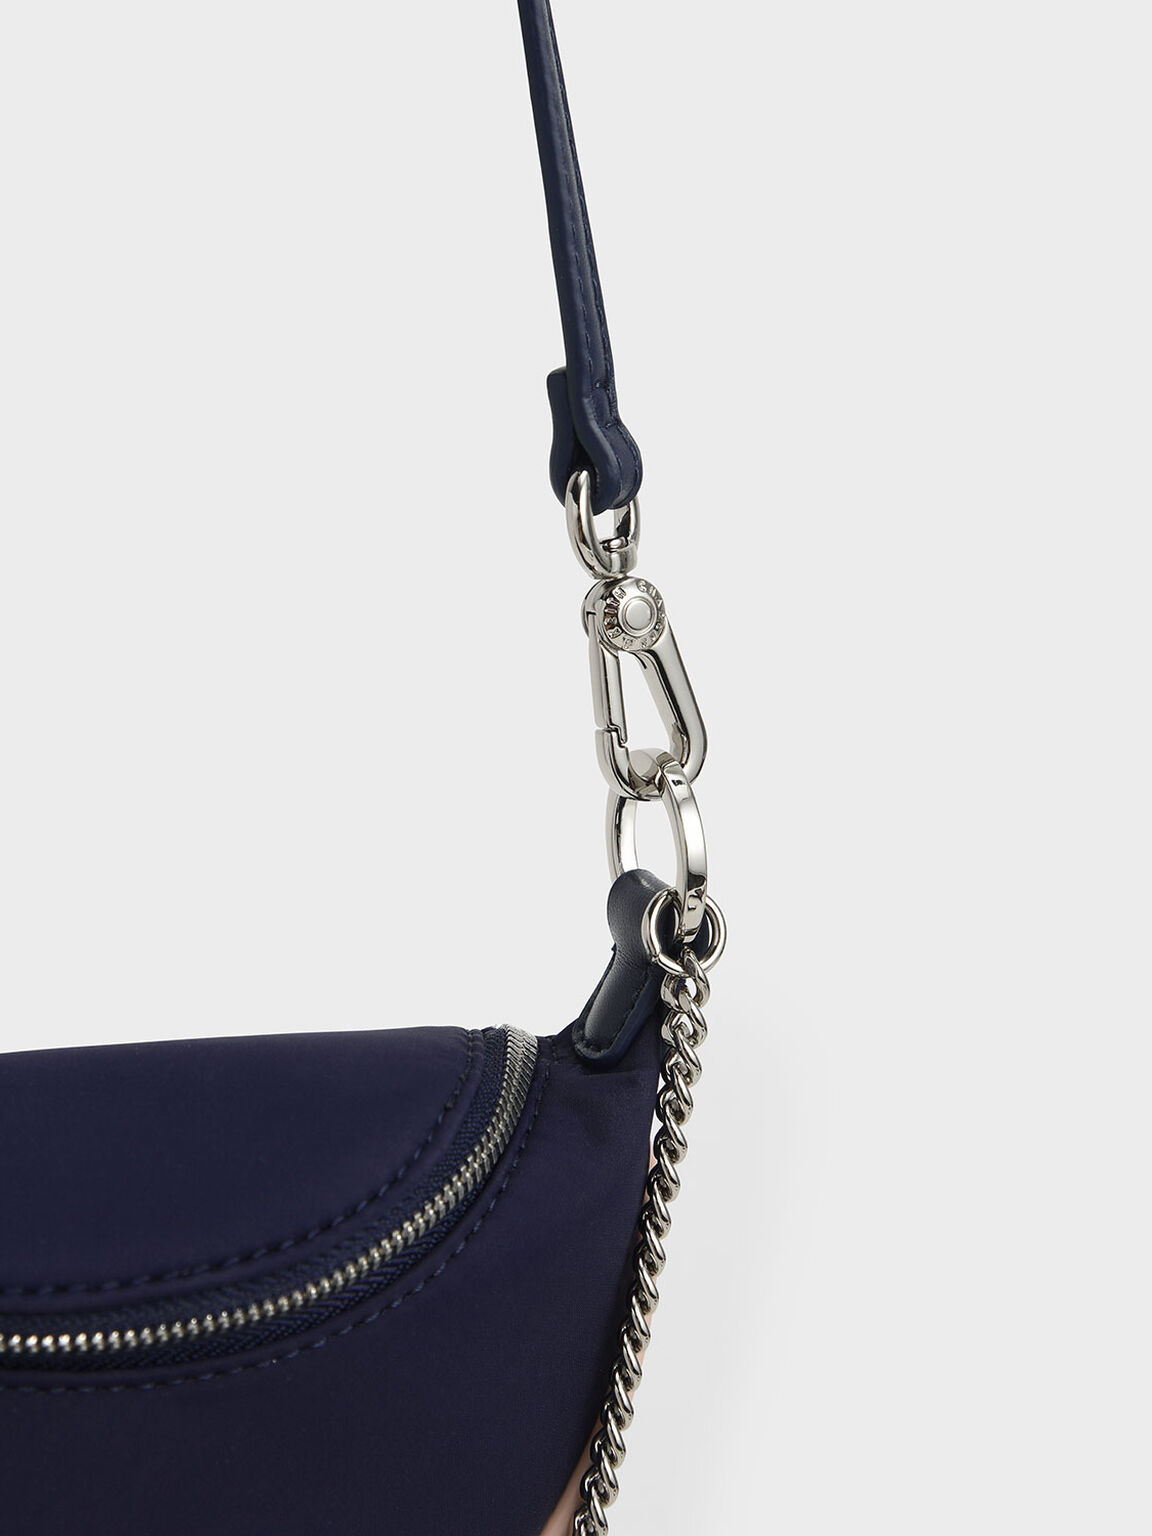 Girls' Chain-Embellished Crossbody Bag, Dark Blue, hi-res